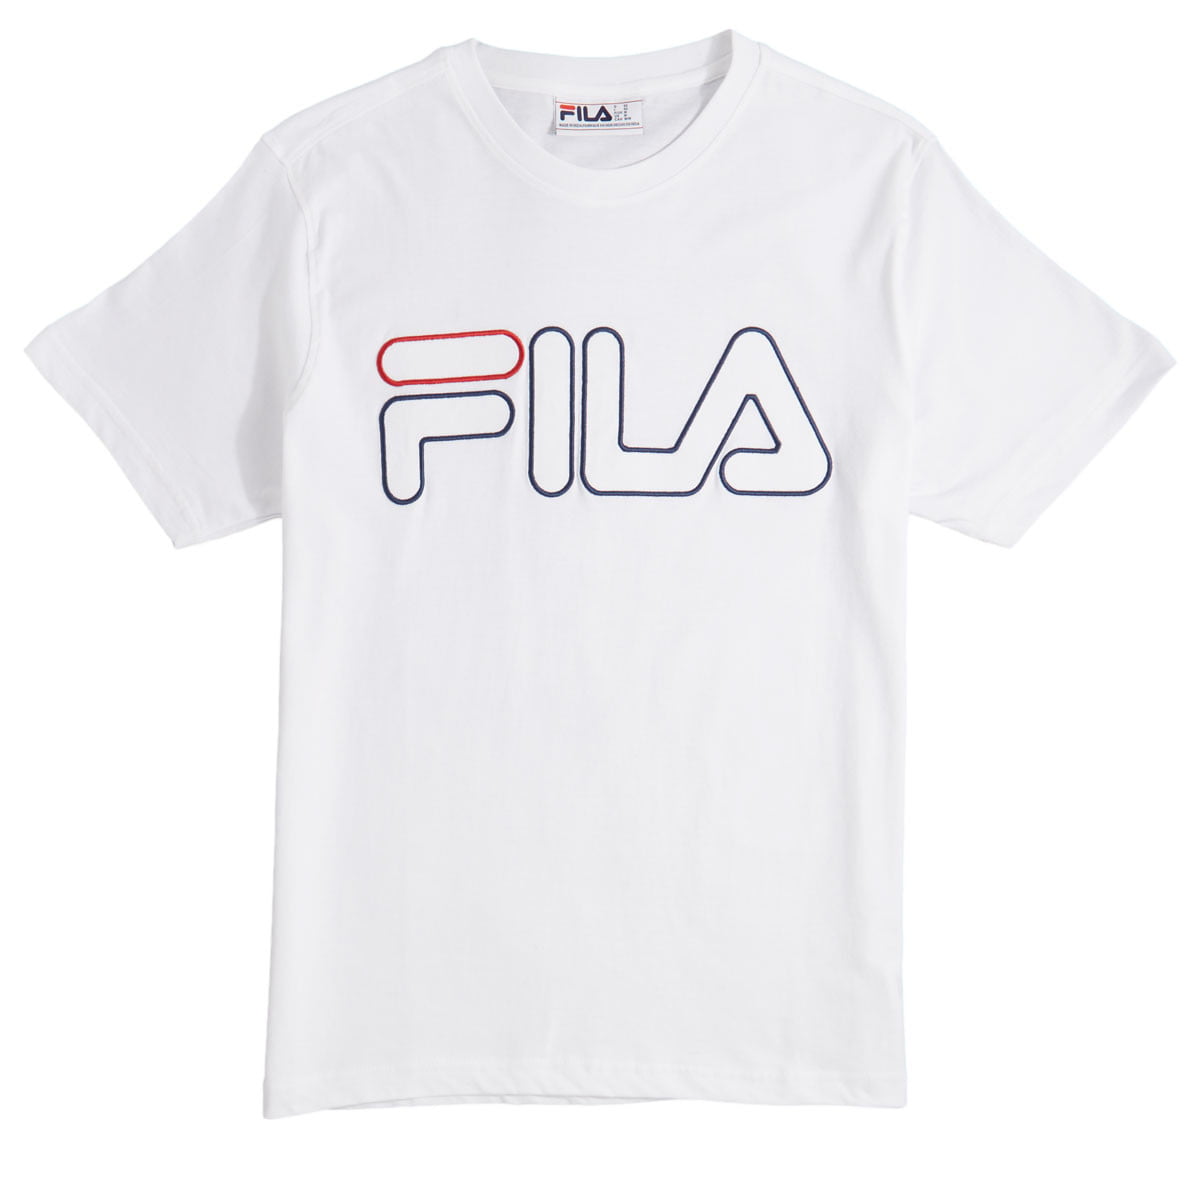 Fila - Fila Men's Borough T Shirt Color: White, Size: XL - Walmart.com ...